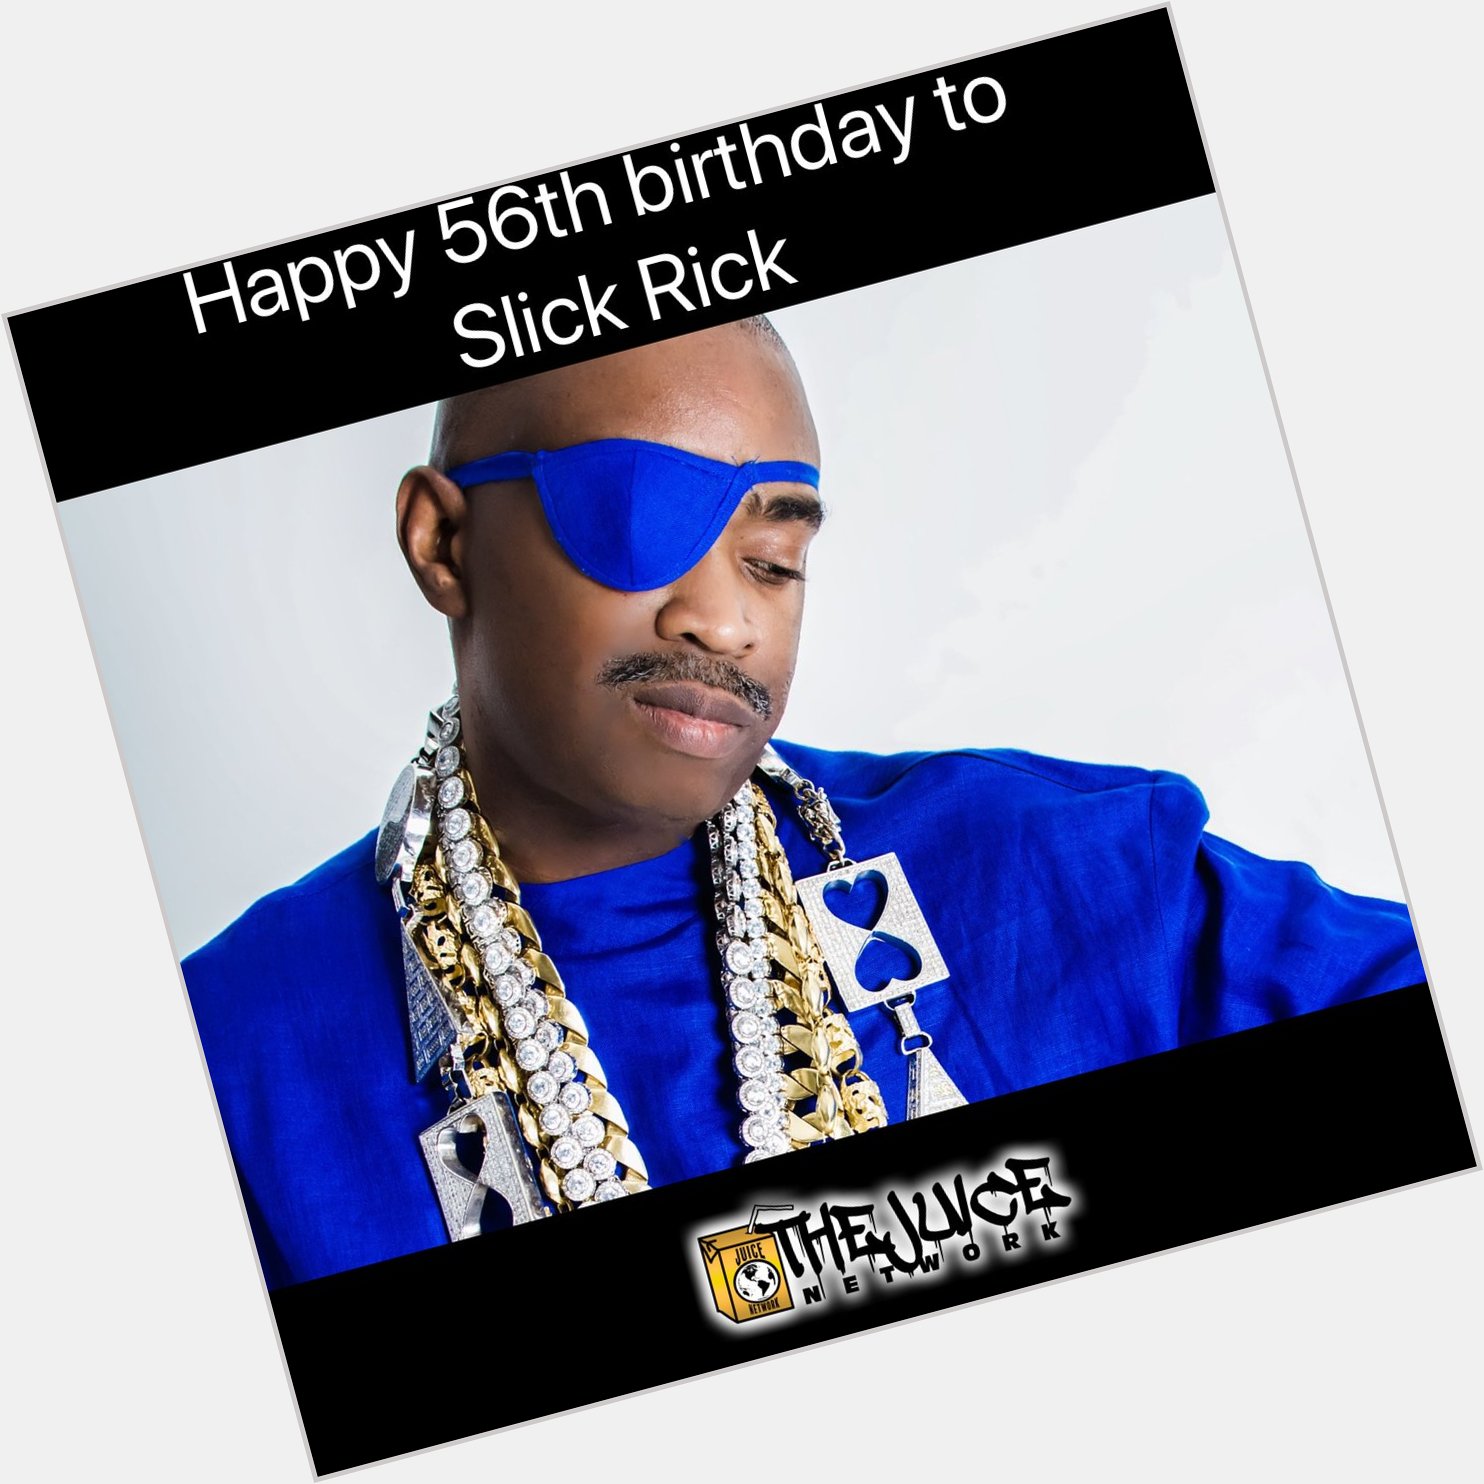 Happy 56th birthday to Slick Rick!    